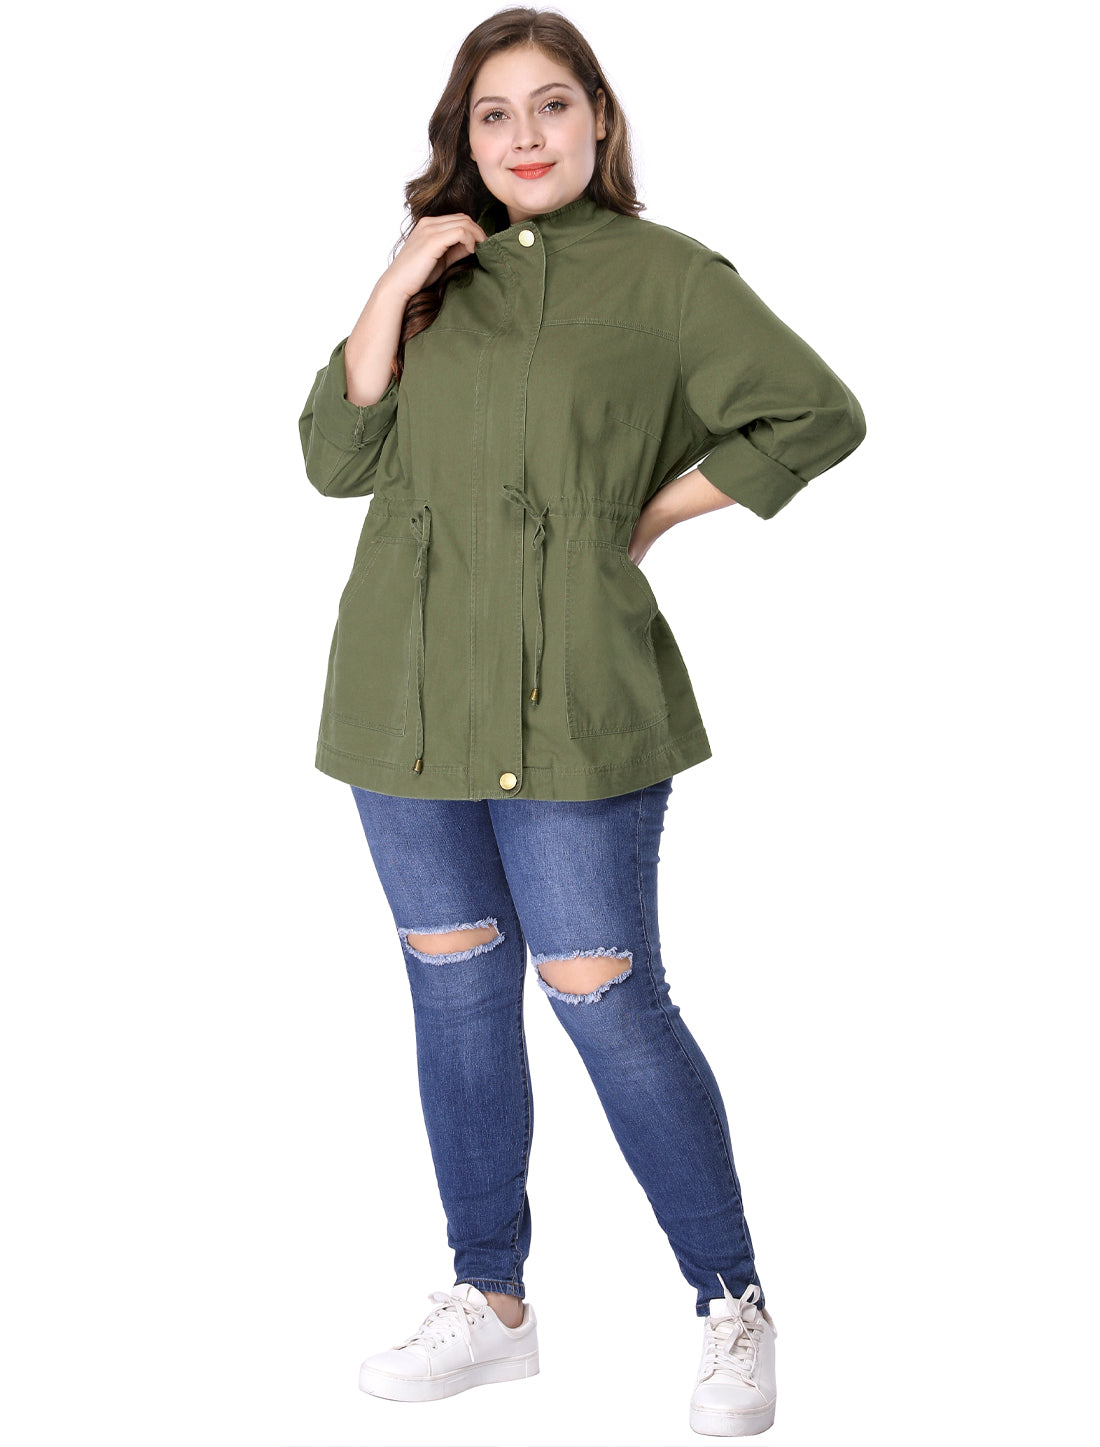 Bublédon Women's Plus Size Stand Collar Drawstring Utility Jacket